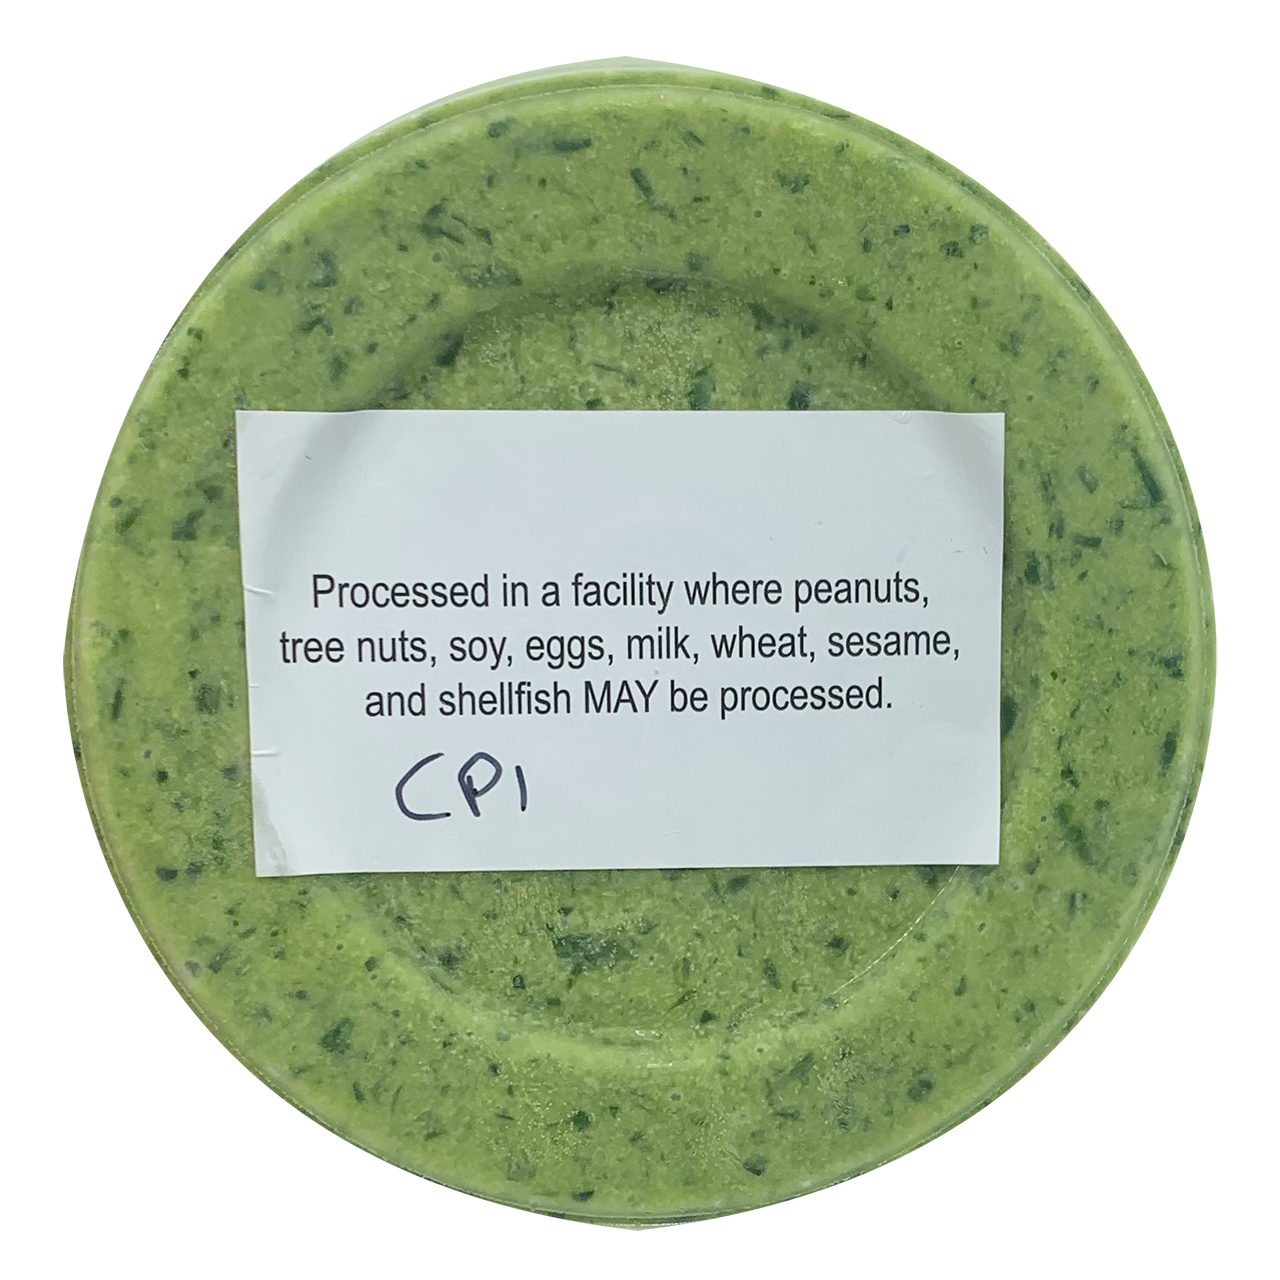 Chive & Parsley Pesto - Nut Free - Frozen